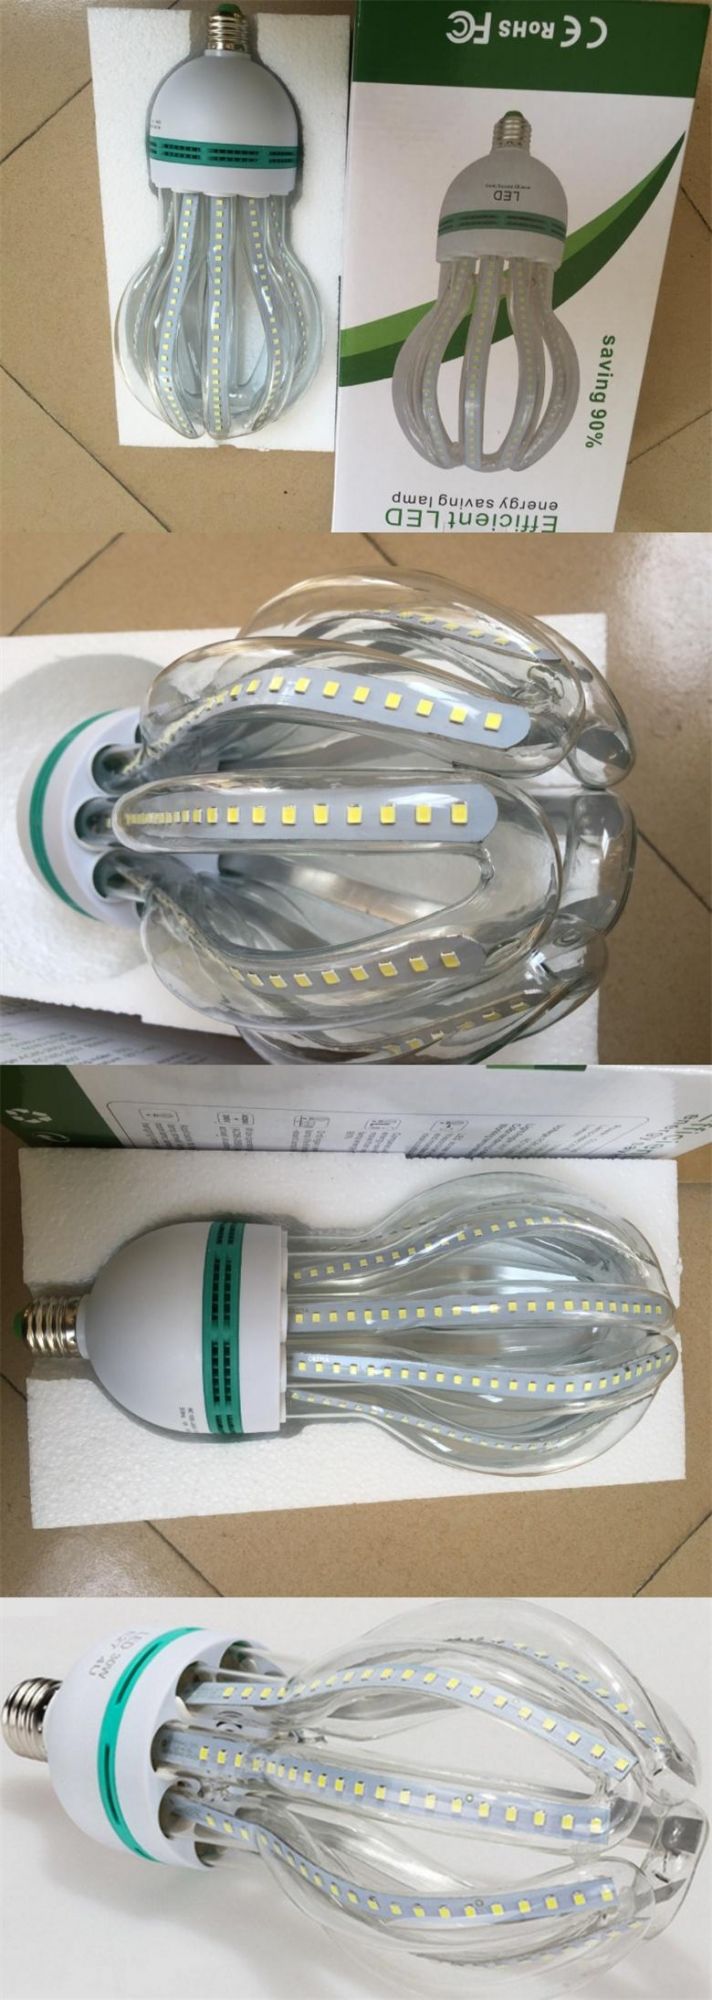 40W E27 Highlight Glass Clear Milky Lotus Shape LED Energy Saving Lamp